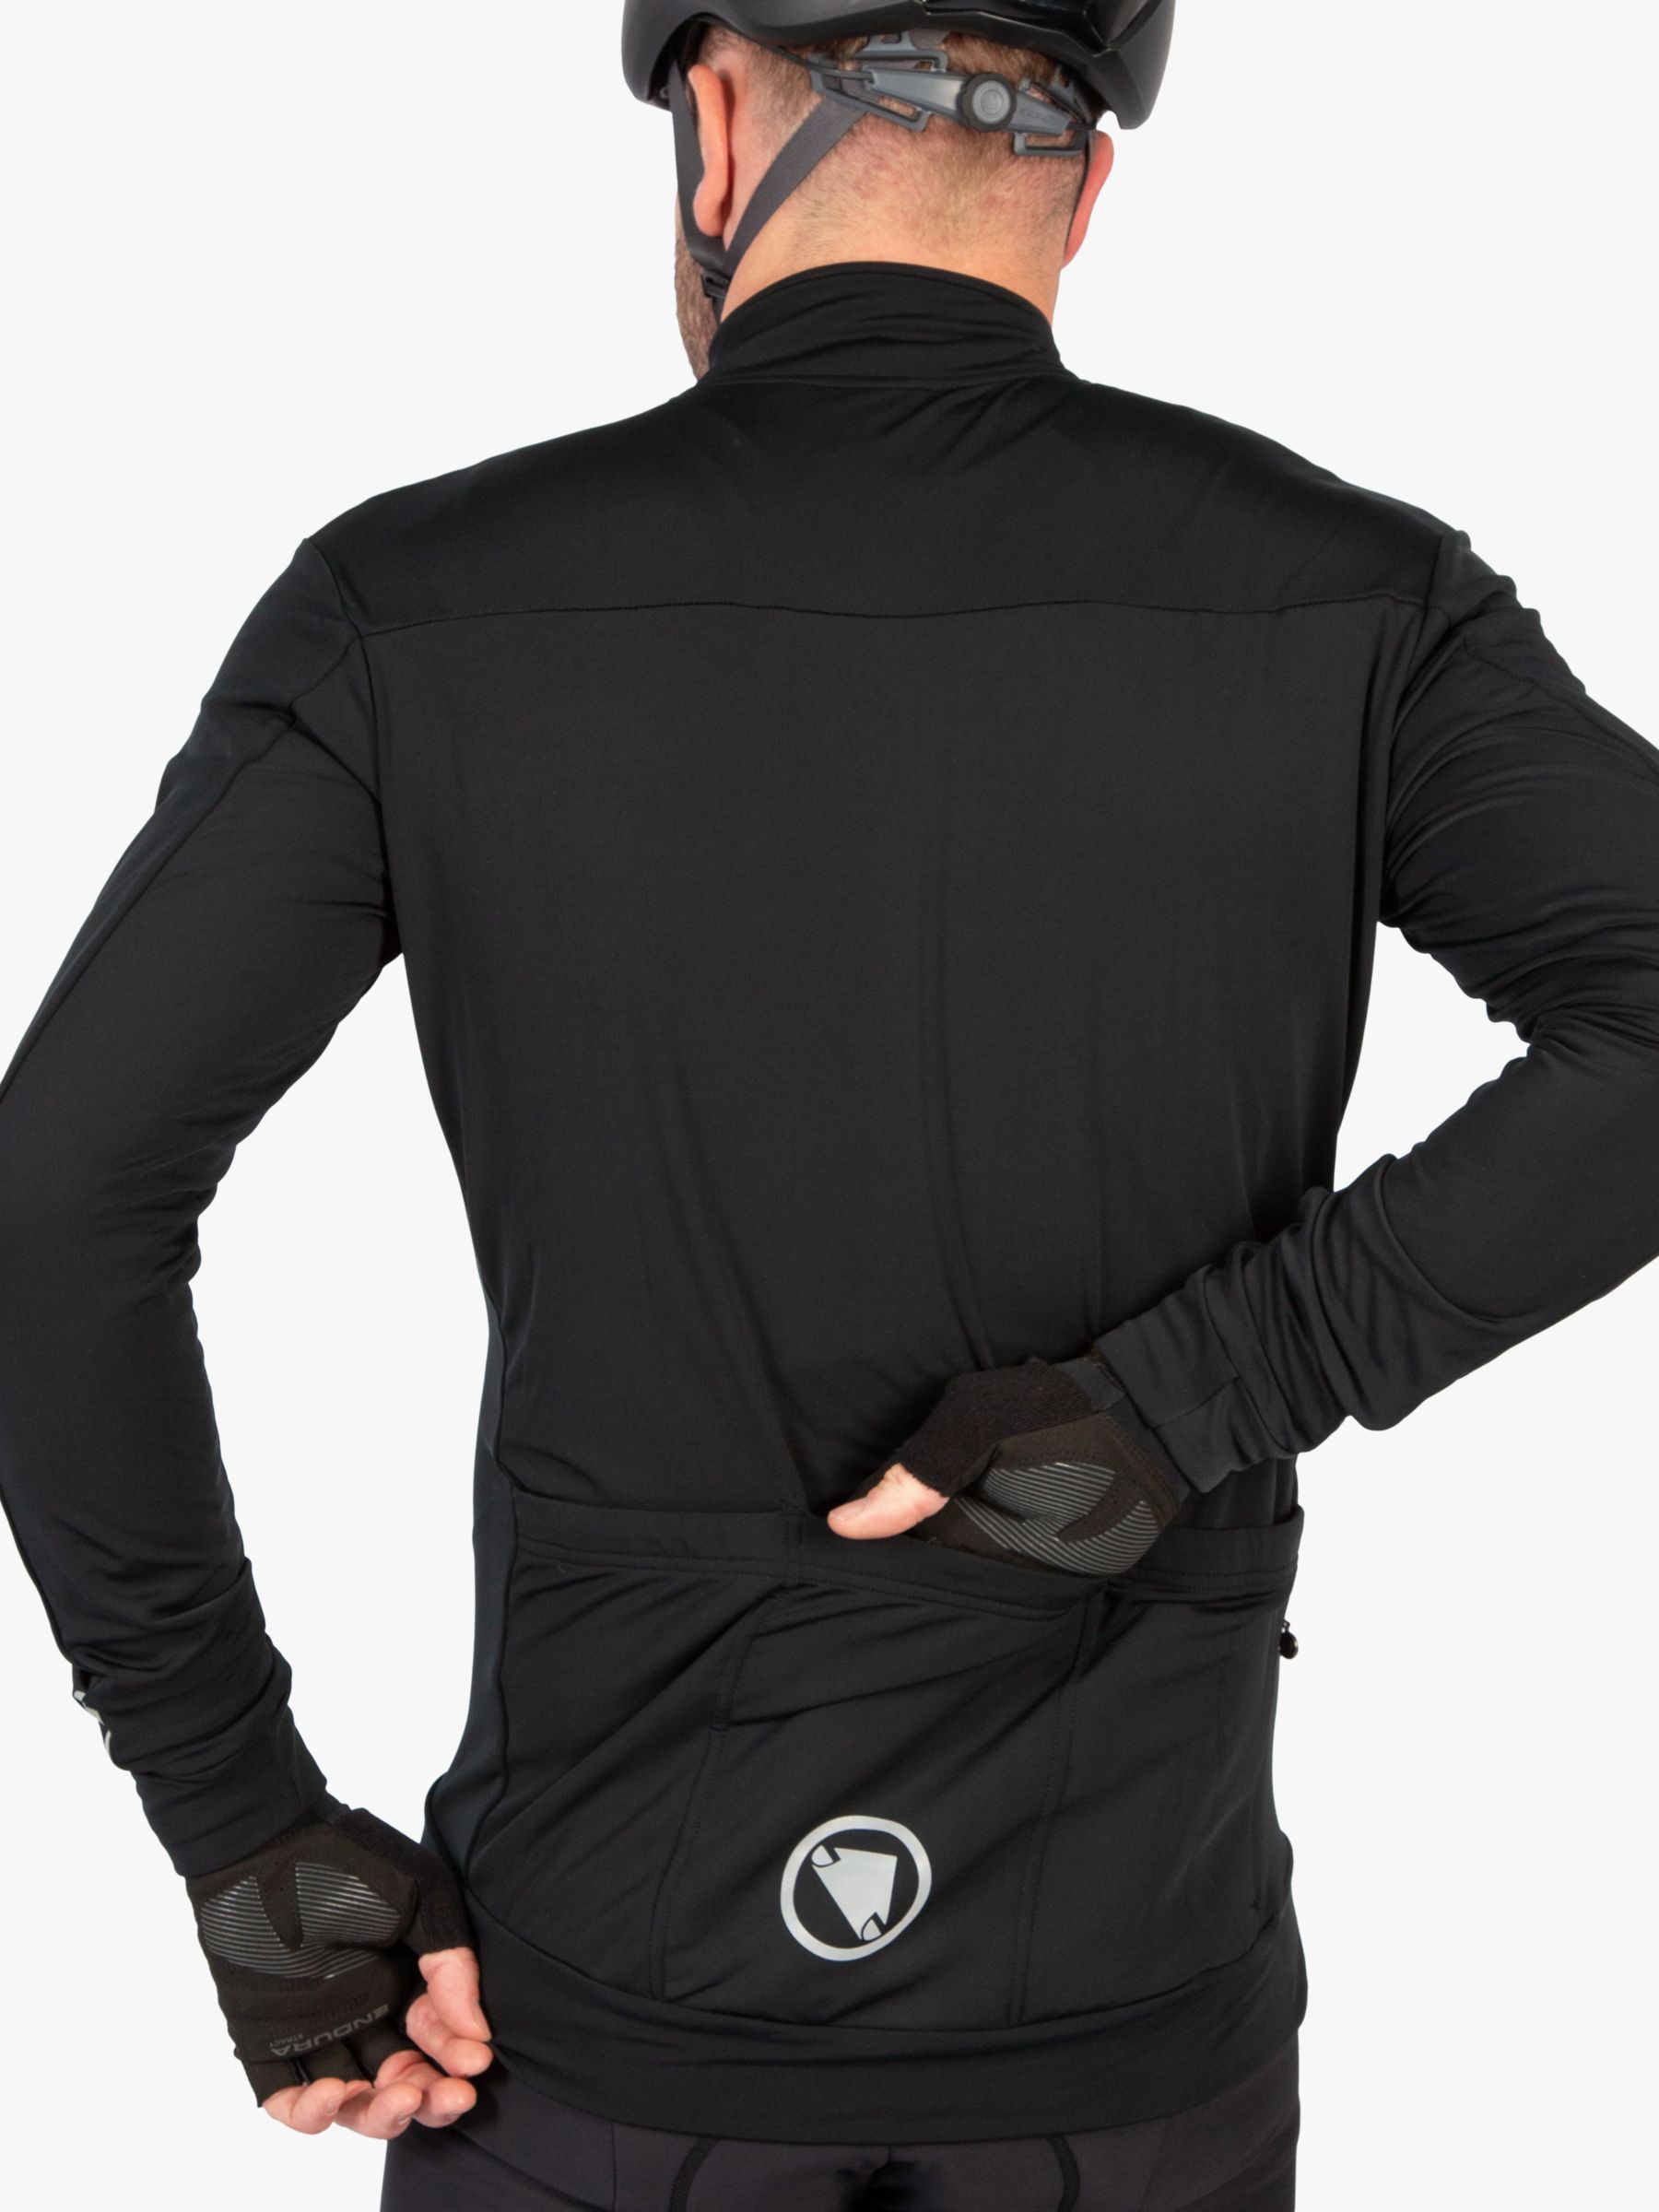 Endura Men's Xtract Roubaix Long Sleeve Jersey, Black, S